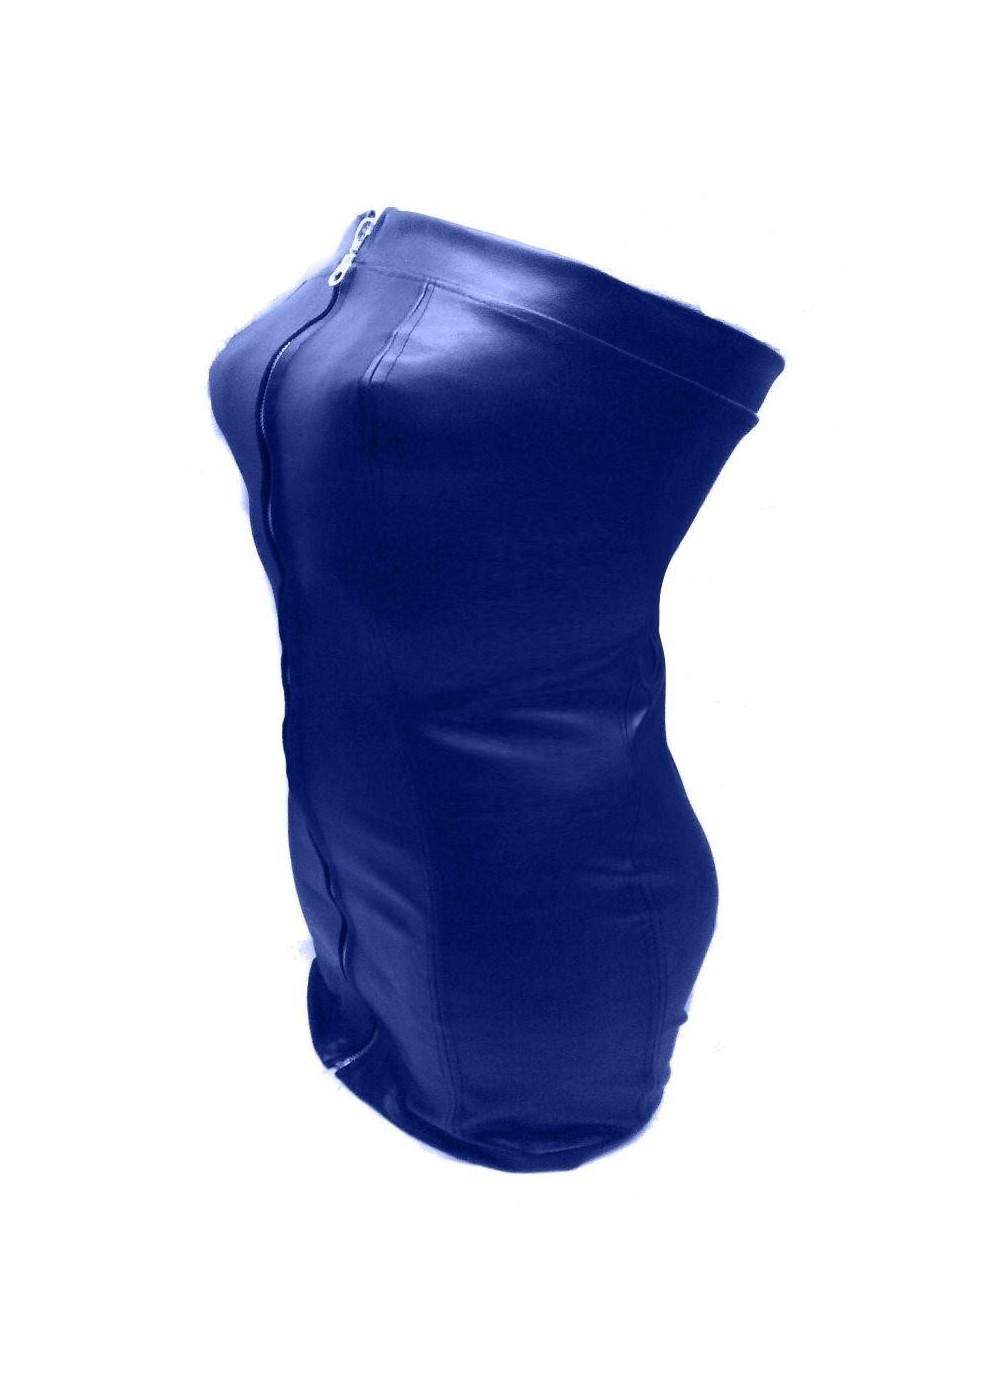 Very soft leather dress blue - 